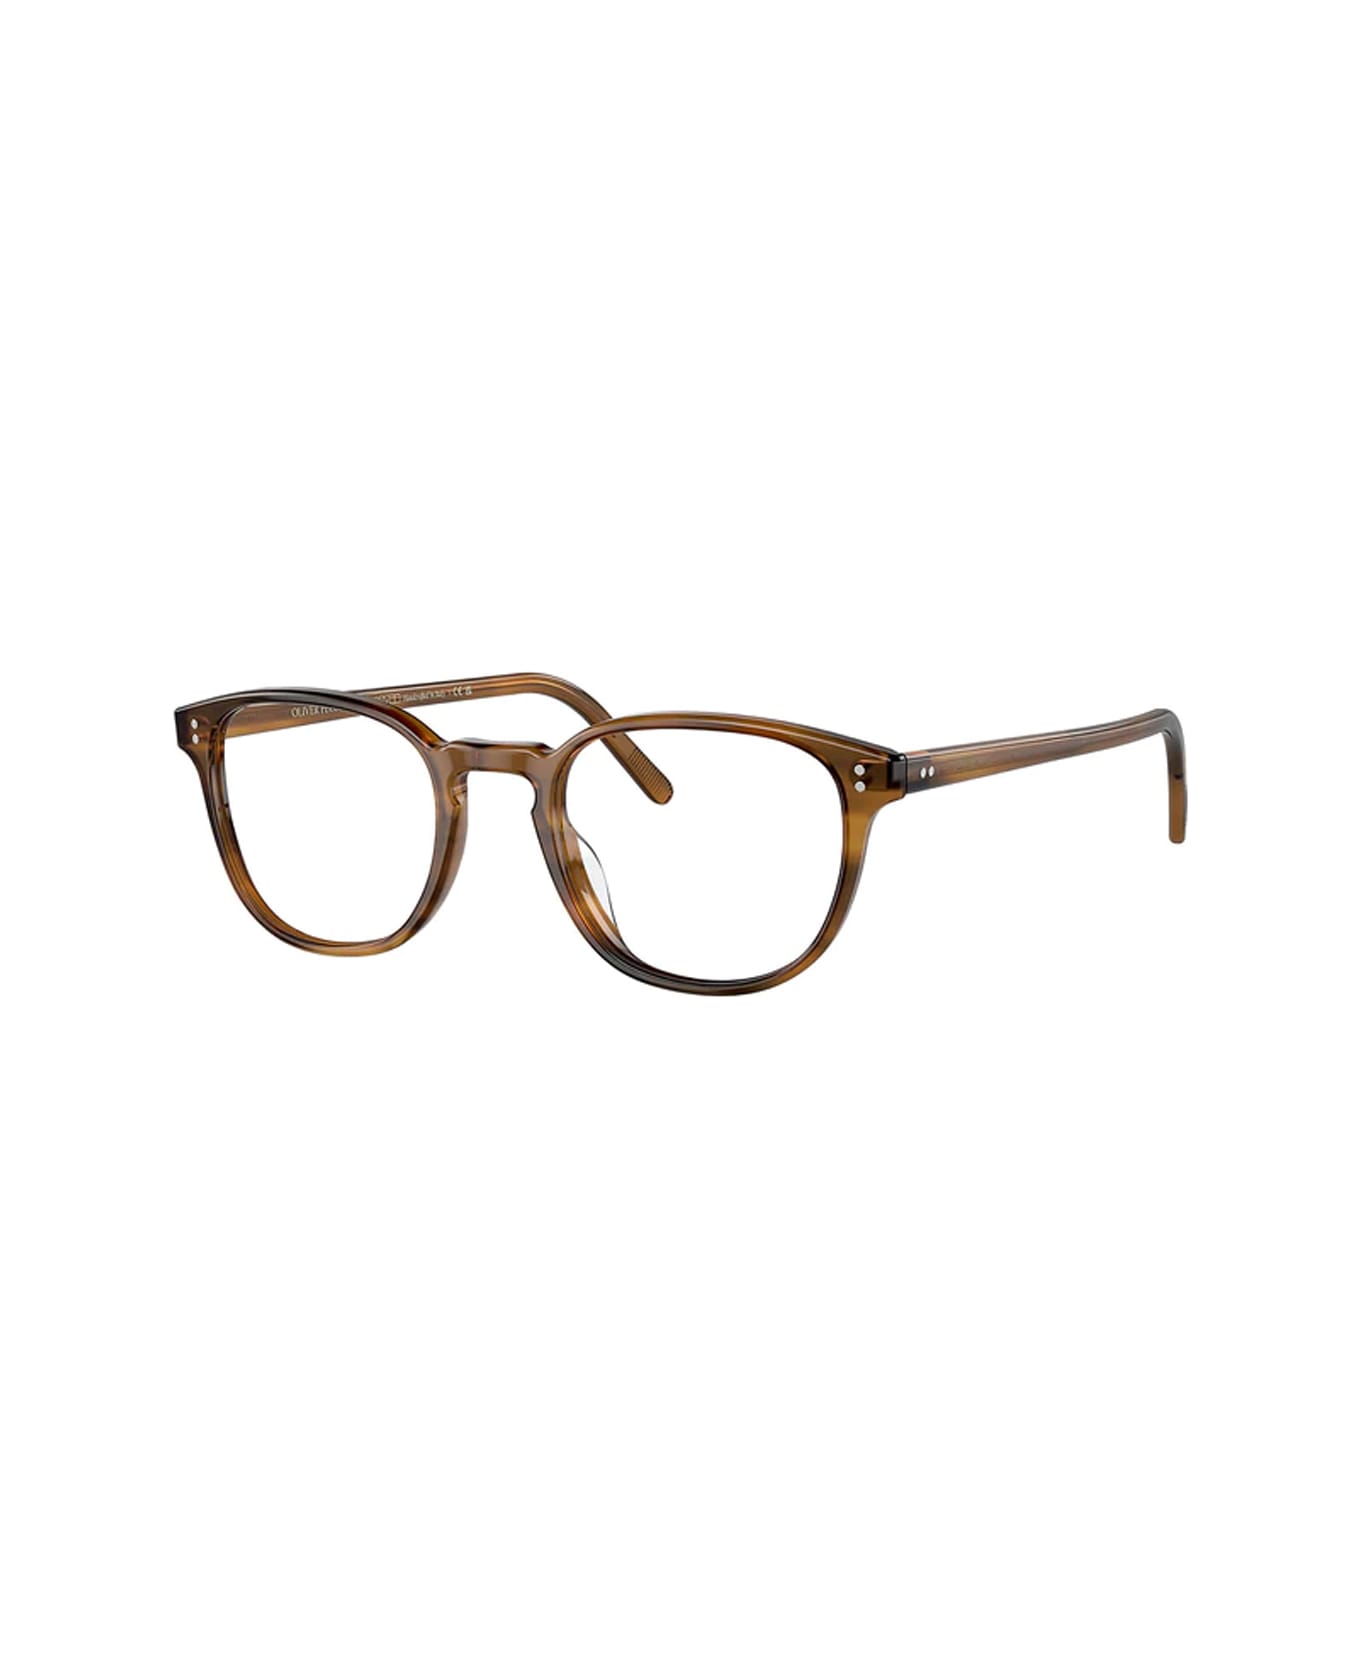 Oliver Peoples Ov5219 - Fairmont 1011 Glasses - Marrone アイウェア